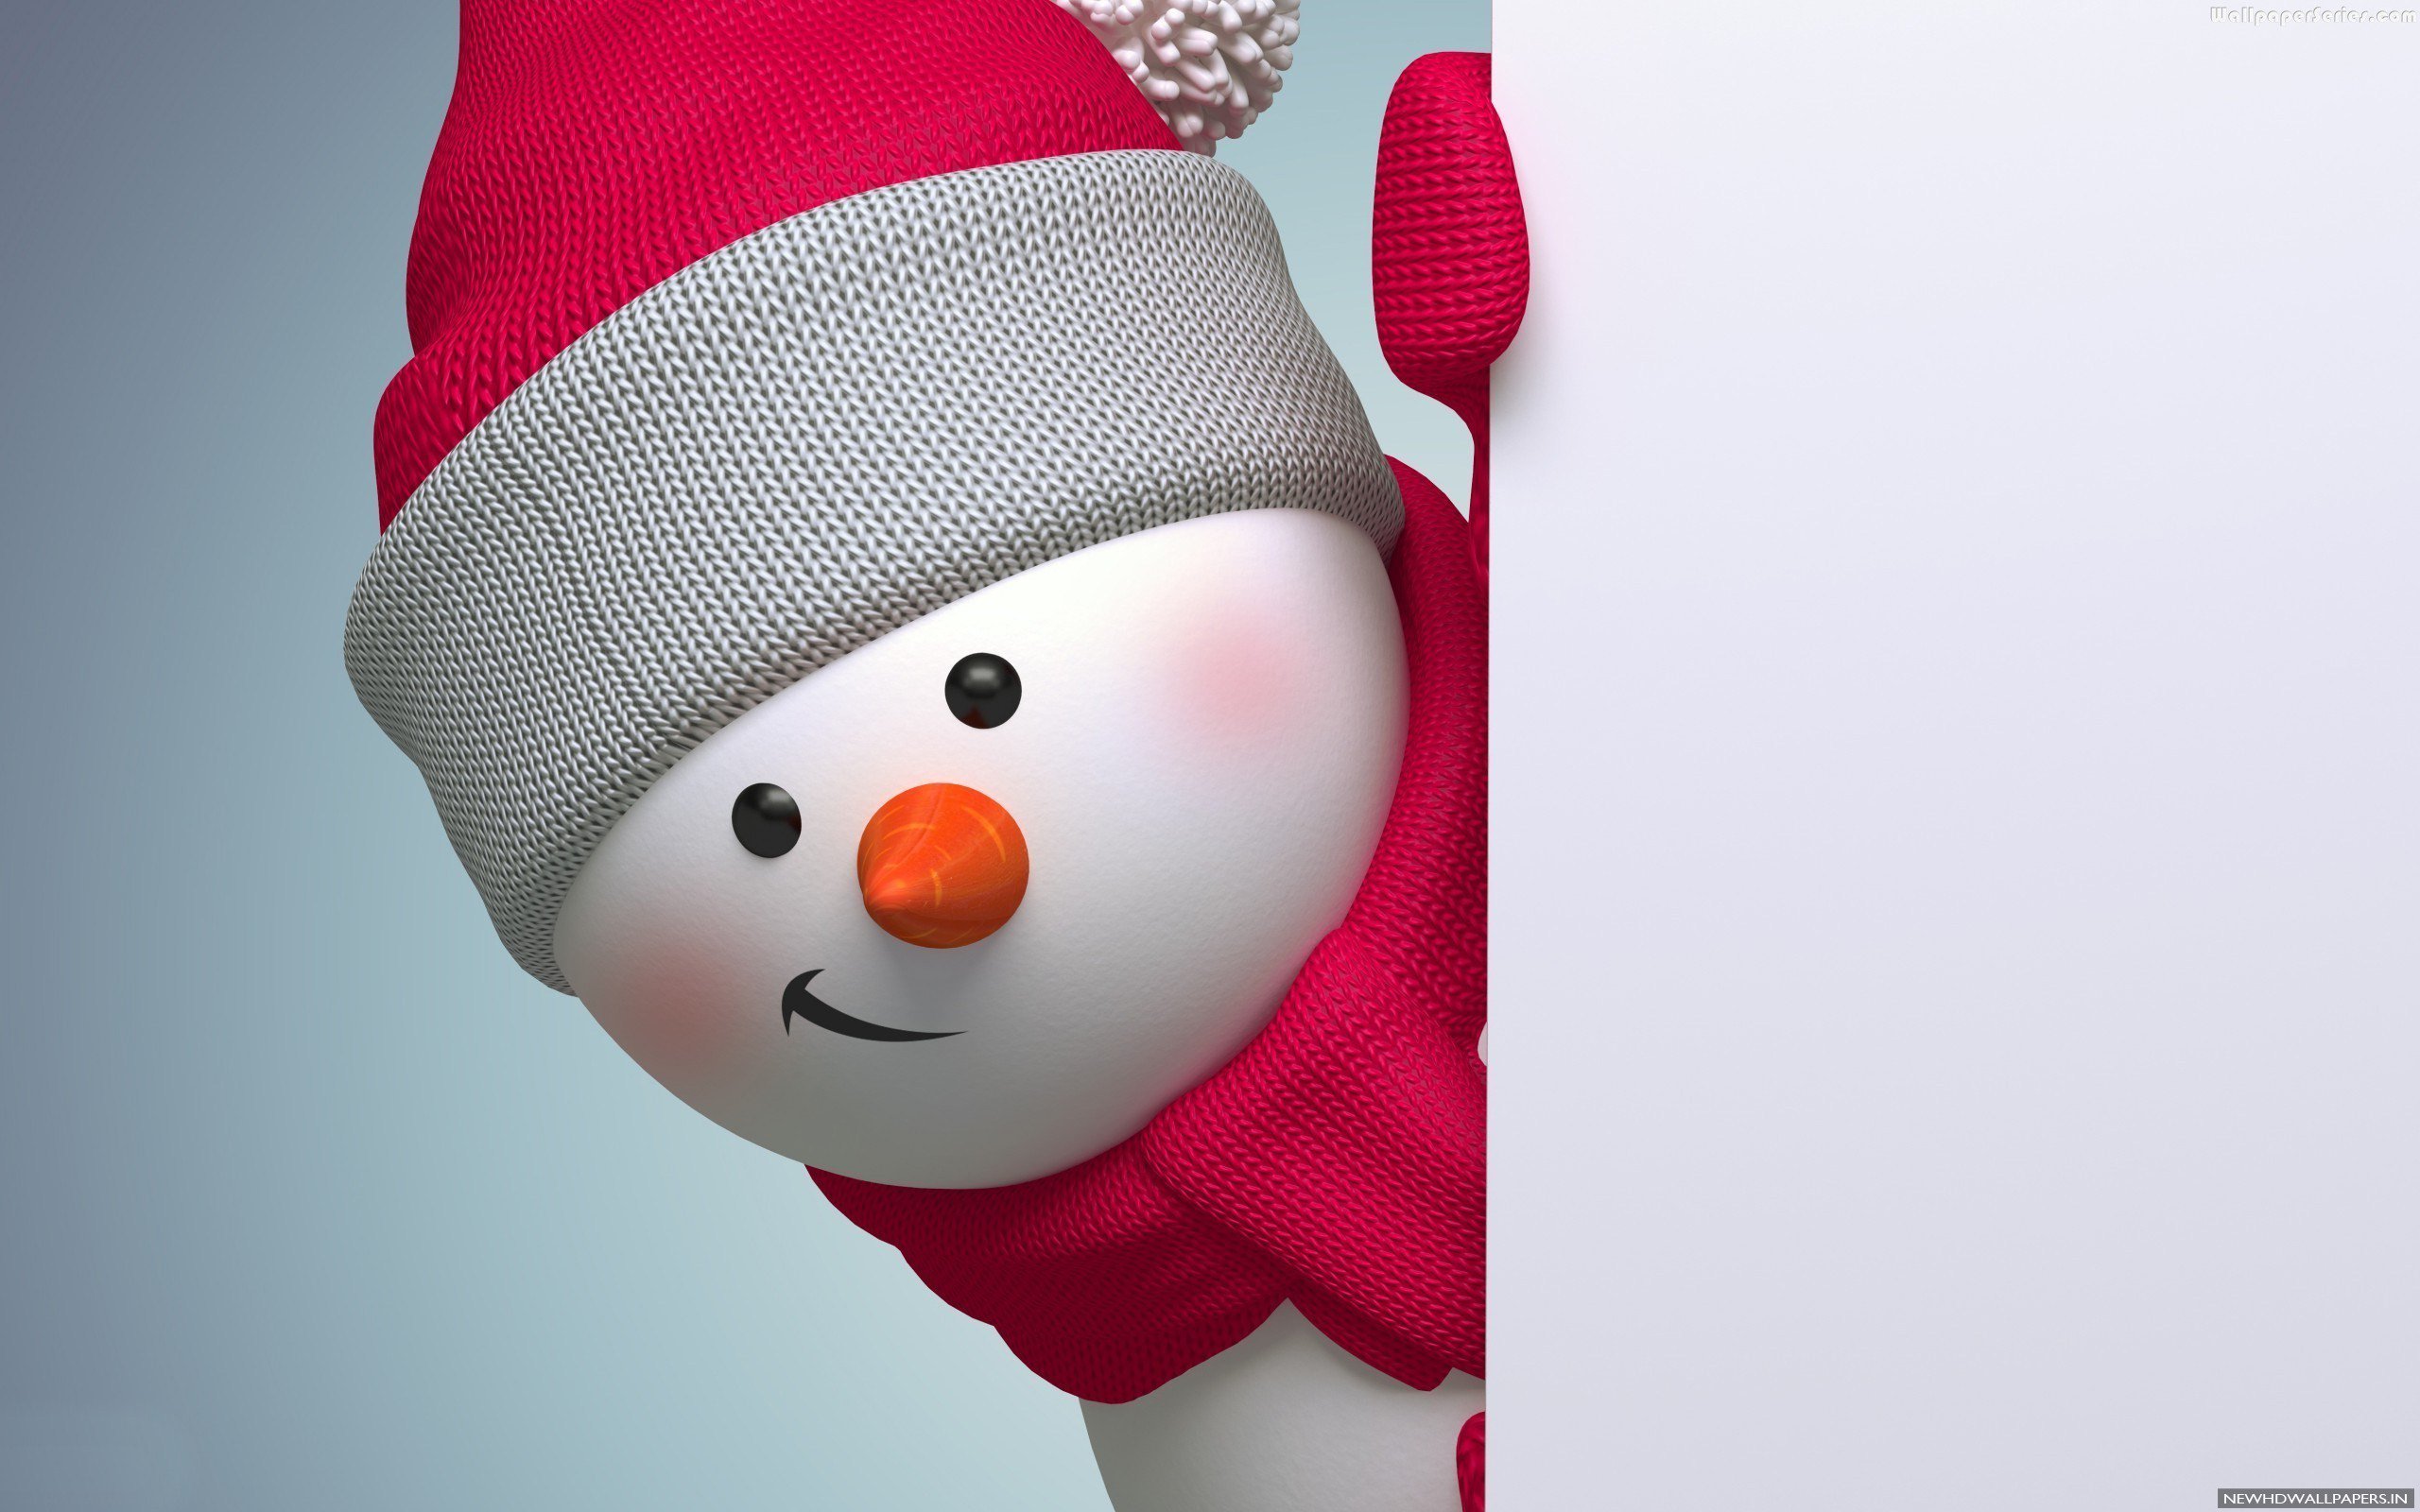 QHD 1440p Wallpaper To Celebrate The Holiday Season